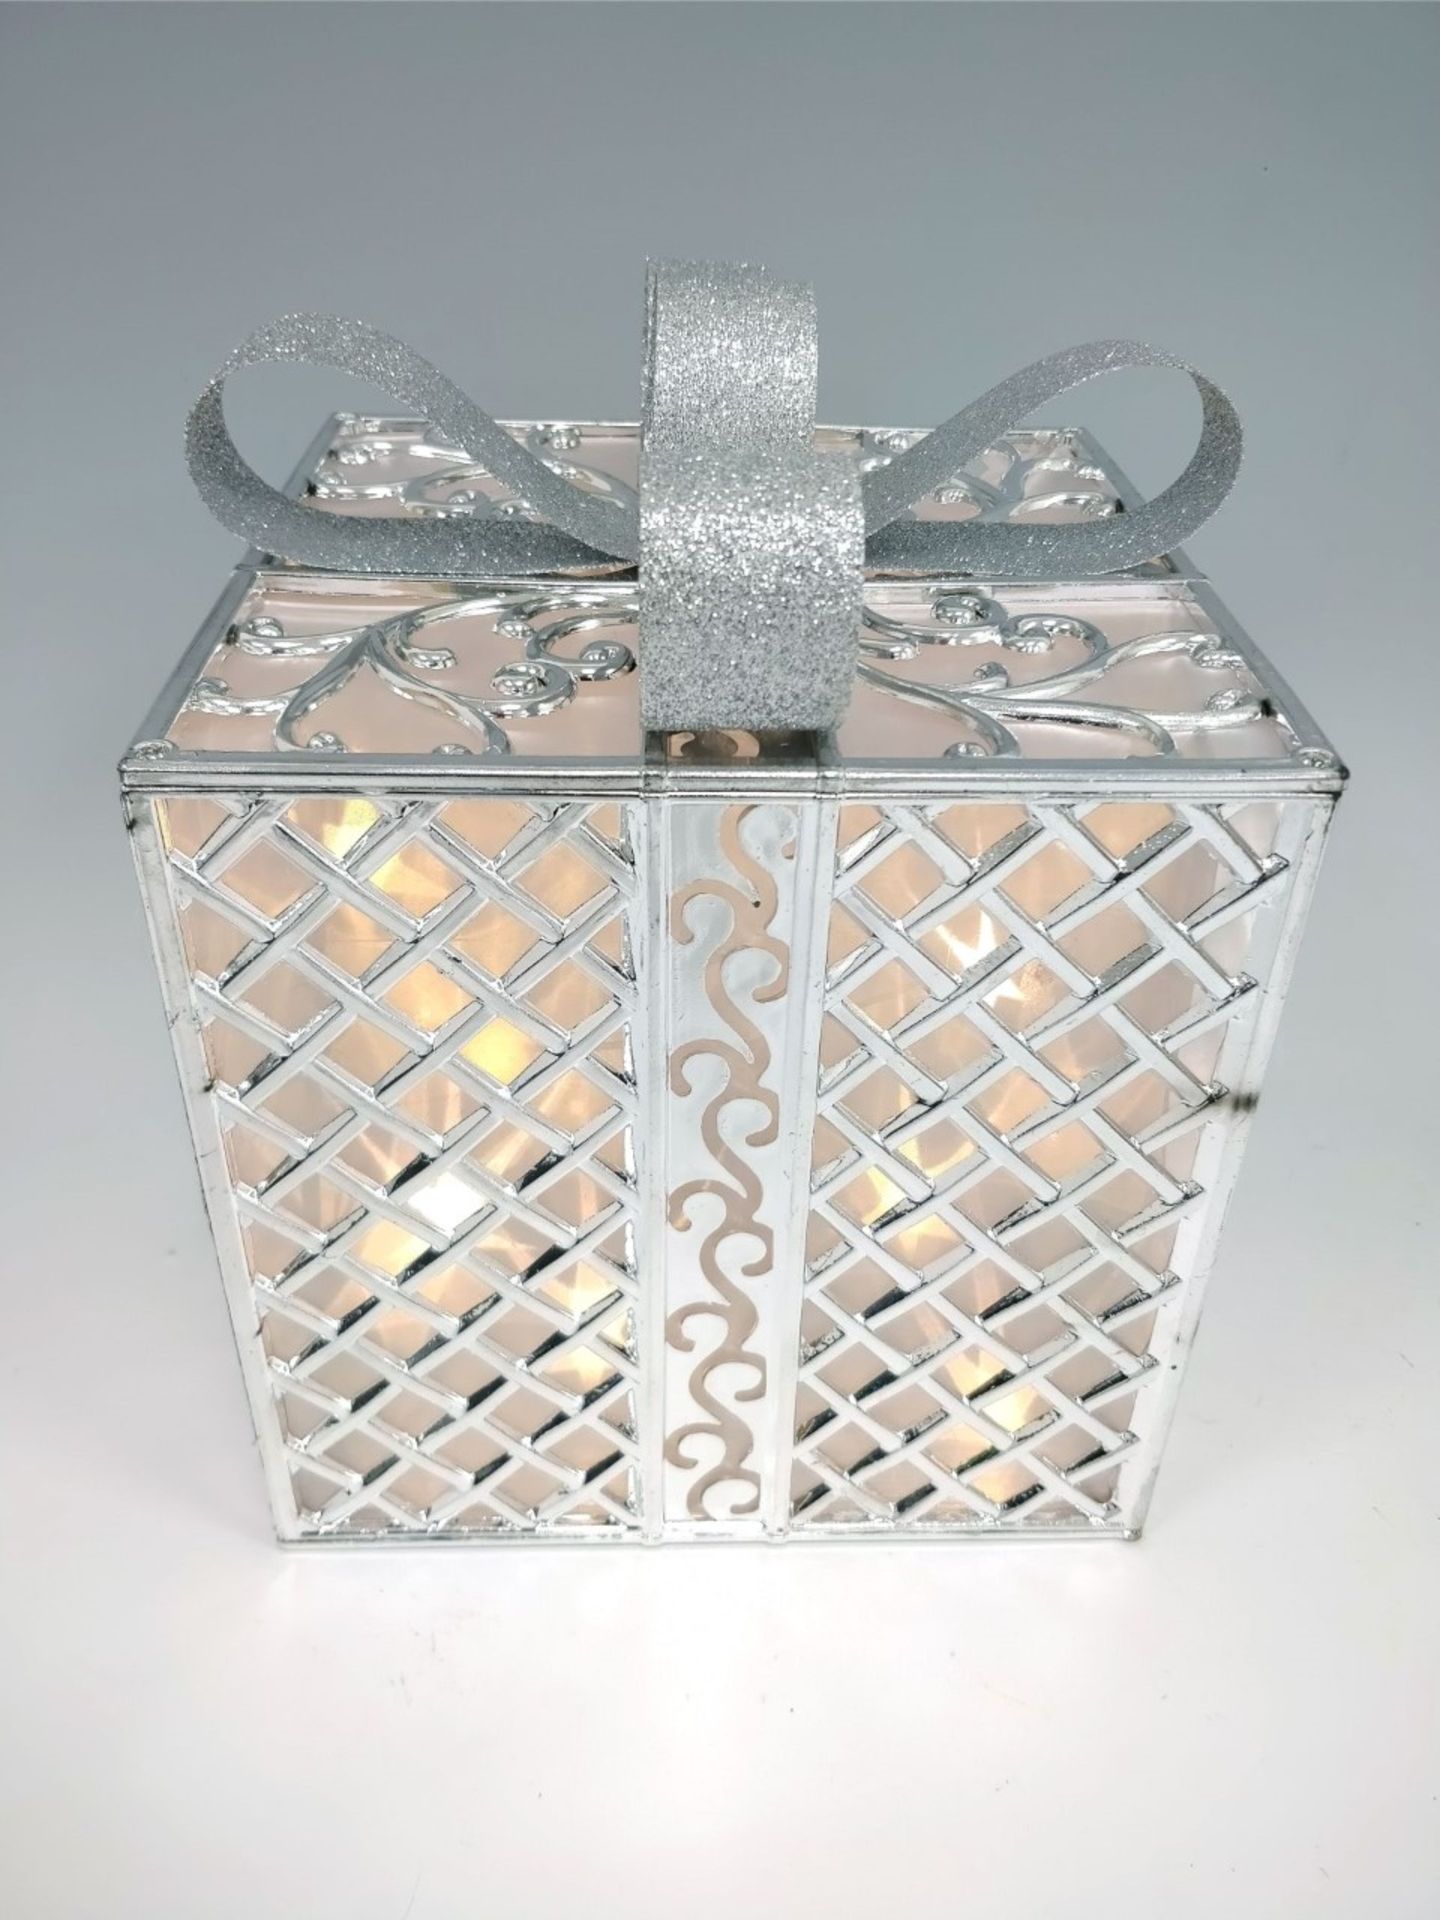 10. x Cartons containing 8pcs Christmas Gift Box design LED light up Christmas decoration - Brand